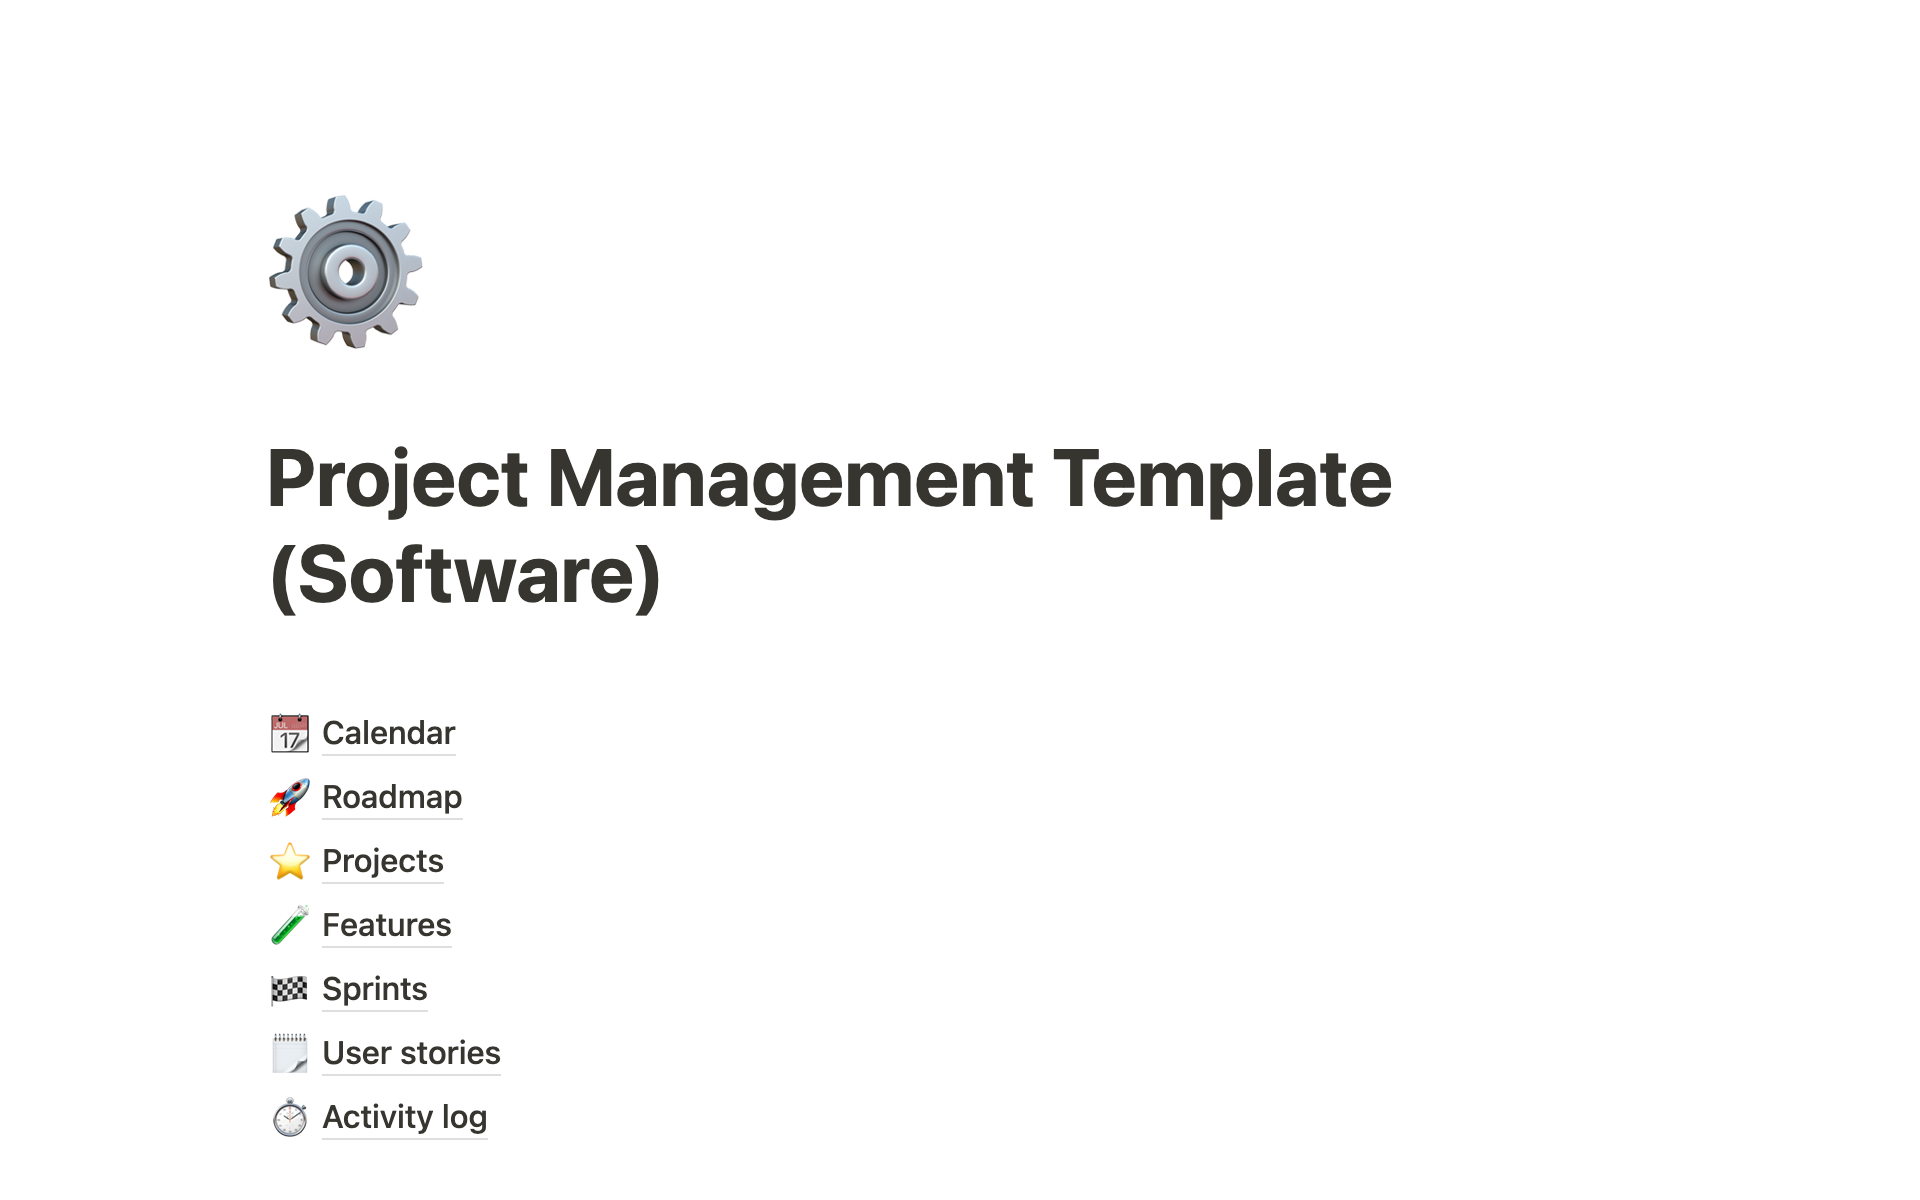 Project management template (Software)님의 템플릿 미리보기